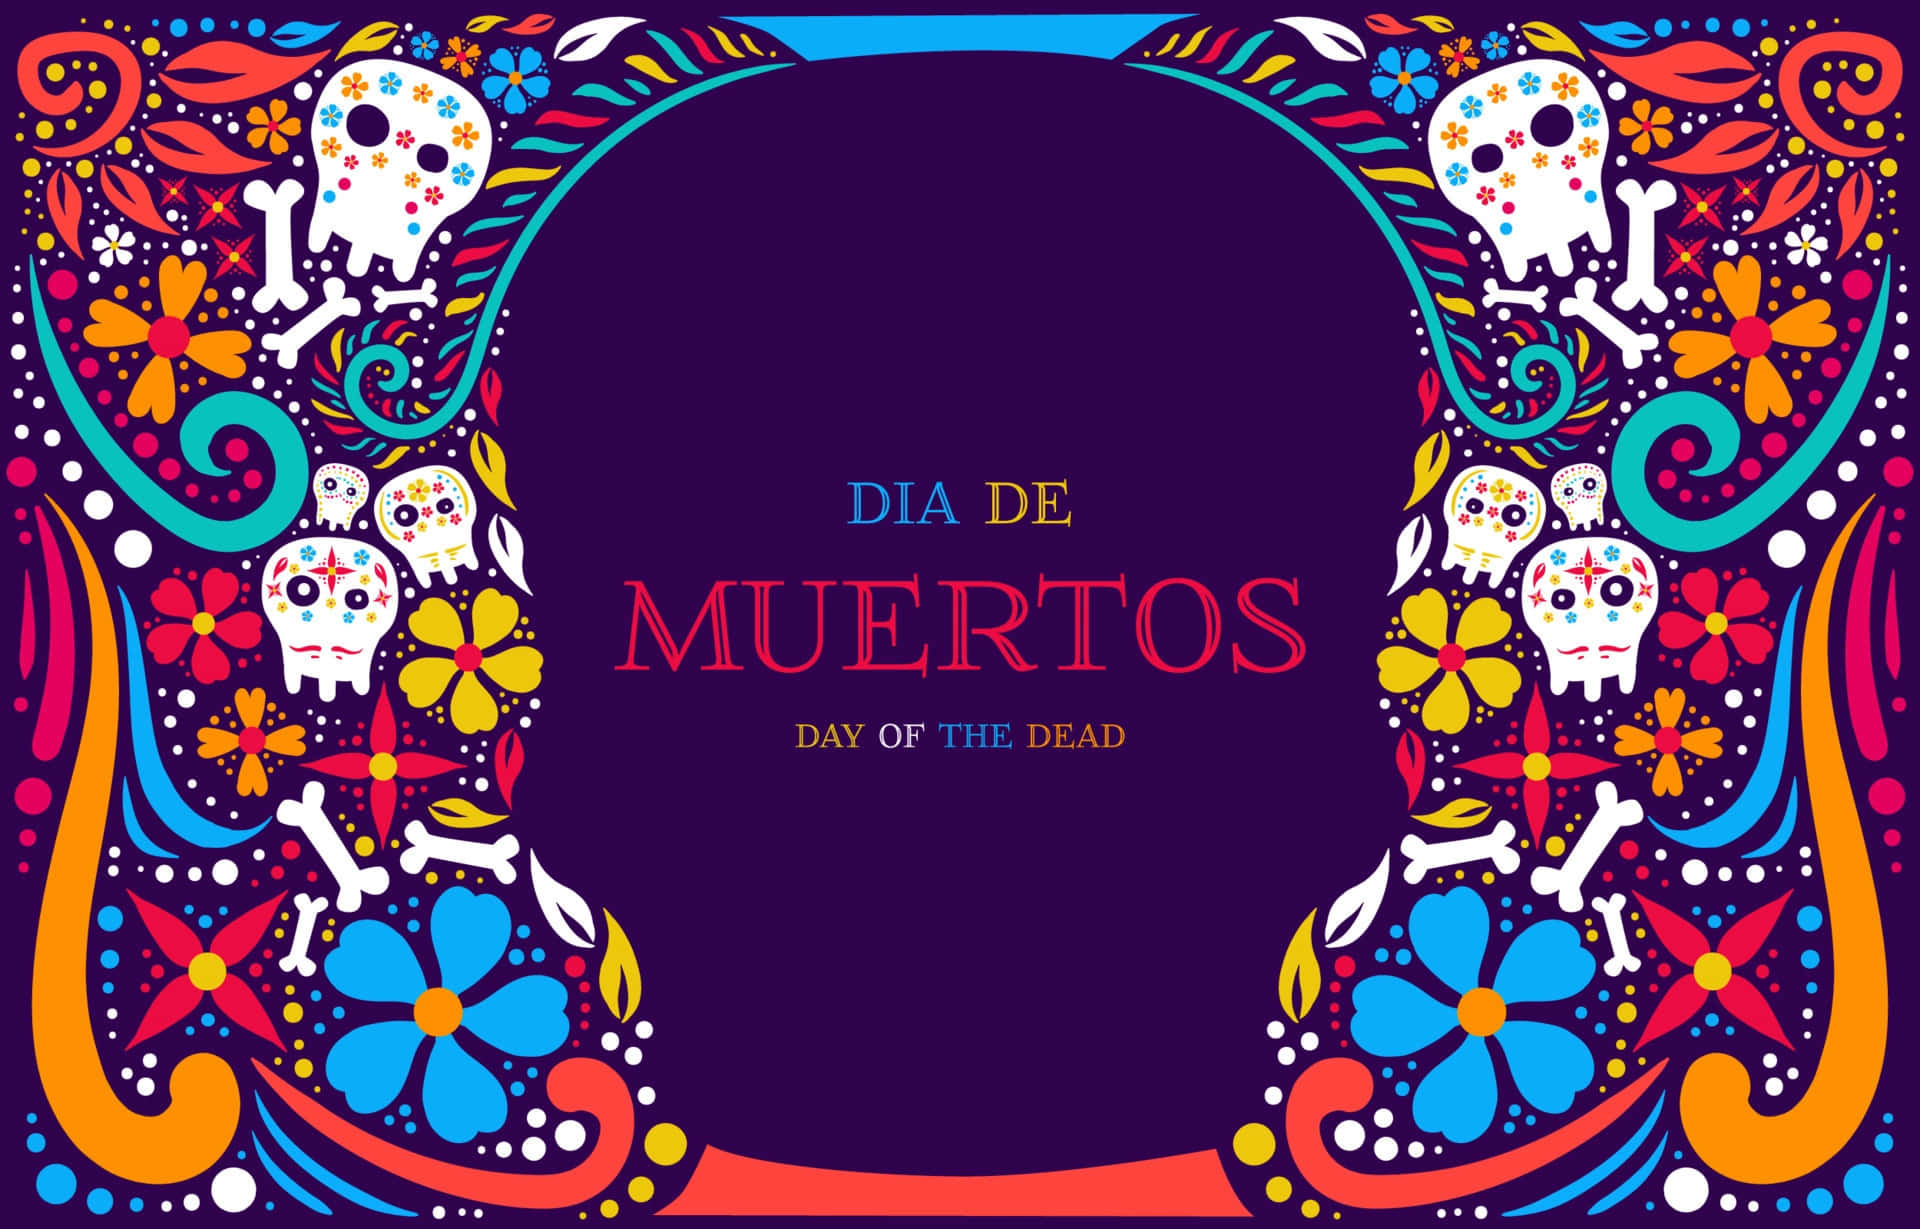 A Colorful Background With The Words Dia De Los Muertos